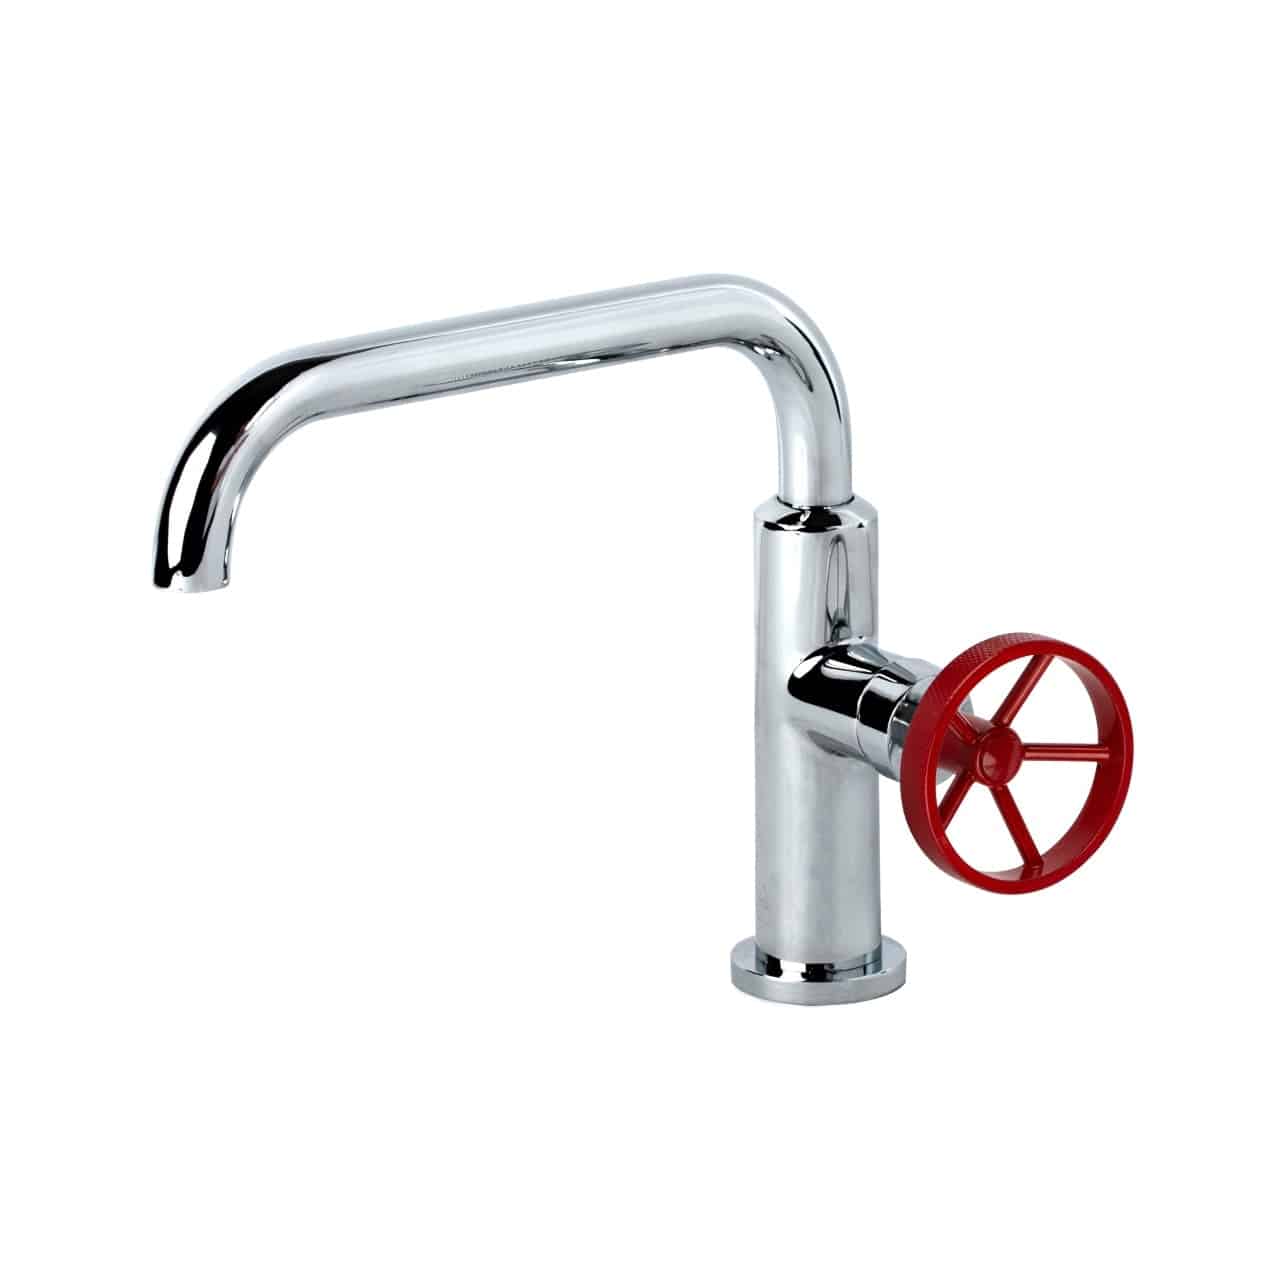 Kube Bath Aqua Loft Single Lever Bathroom Vanity Faucet With Side Handle – Chrome - Renoz